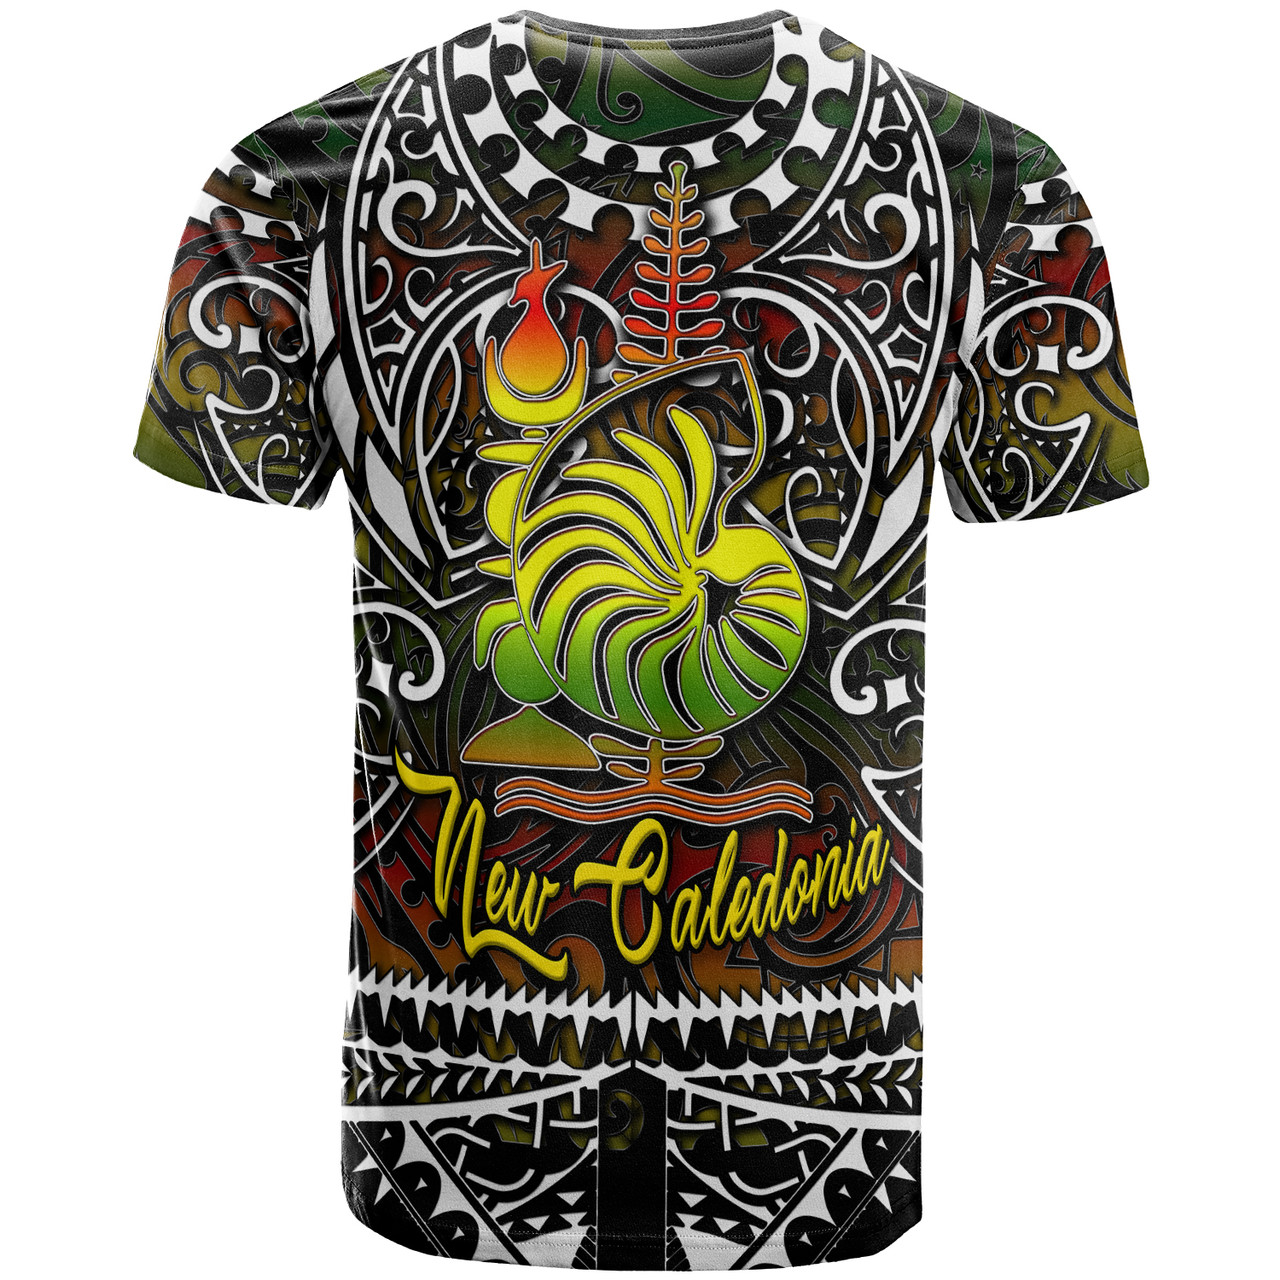 New Caledonia T-shirt - Custom New Caledonia Coat Of Arms Polynesian Pattern T-shirt